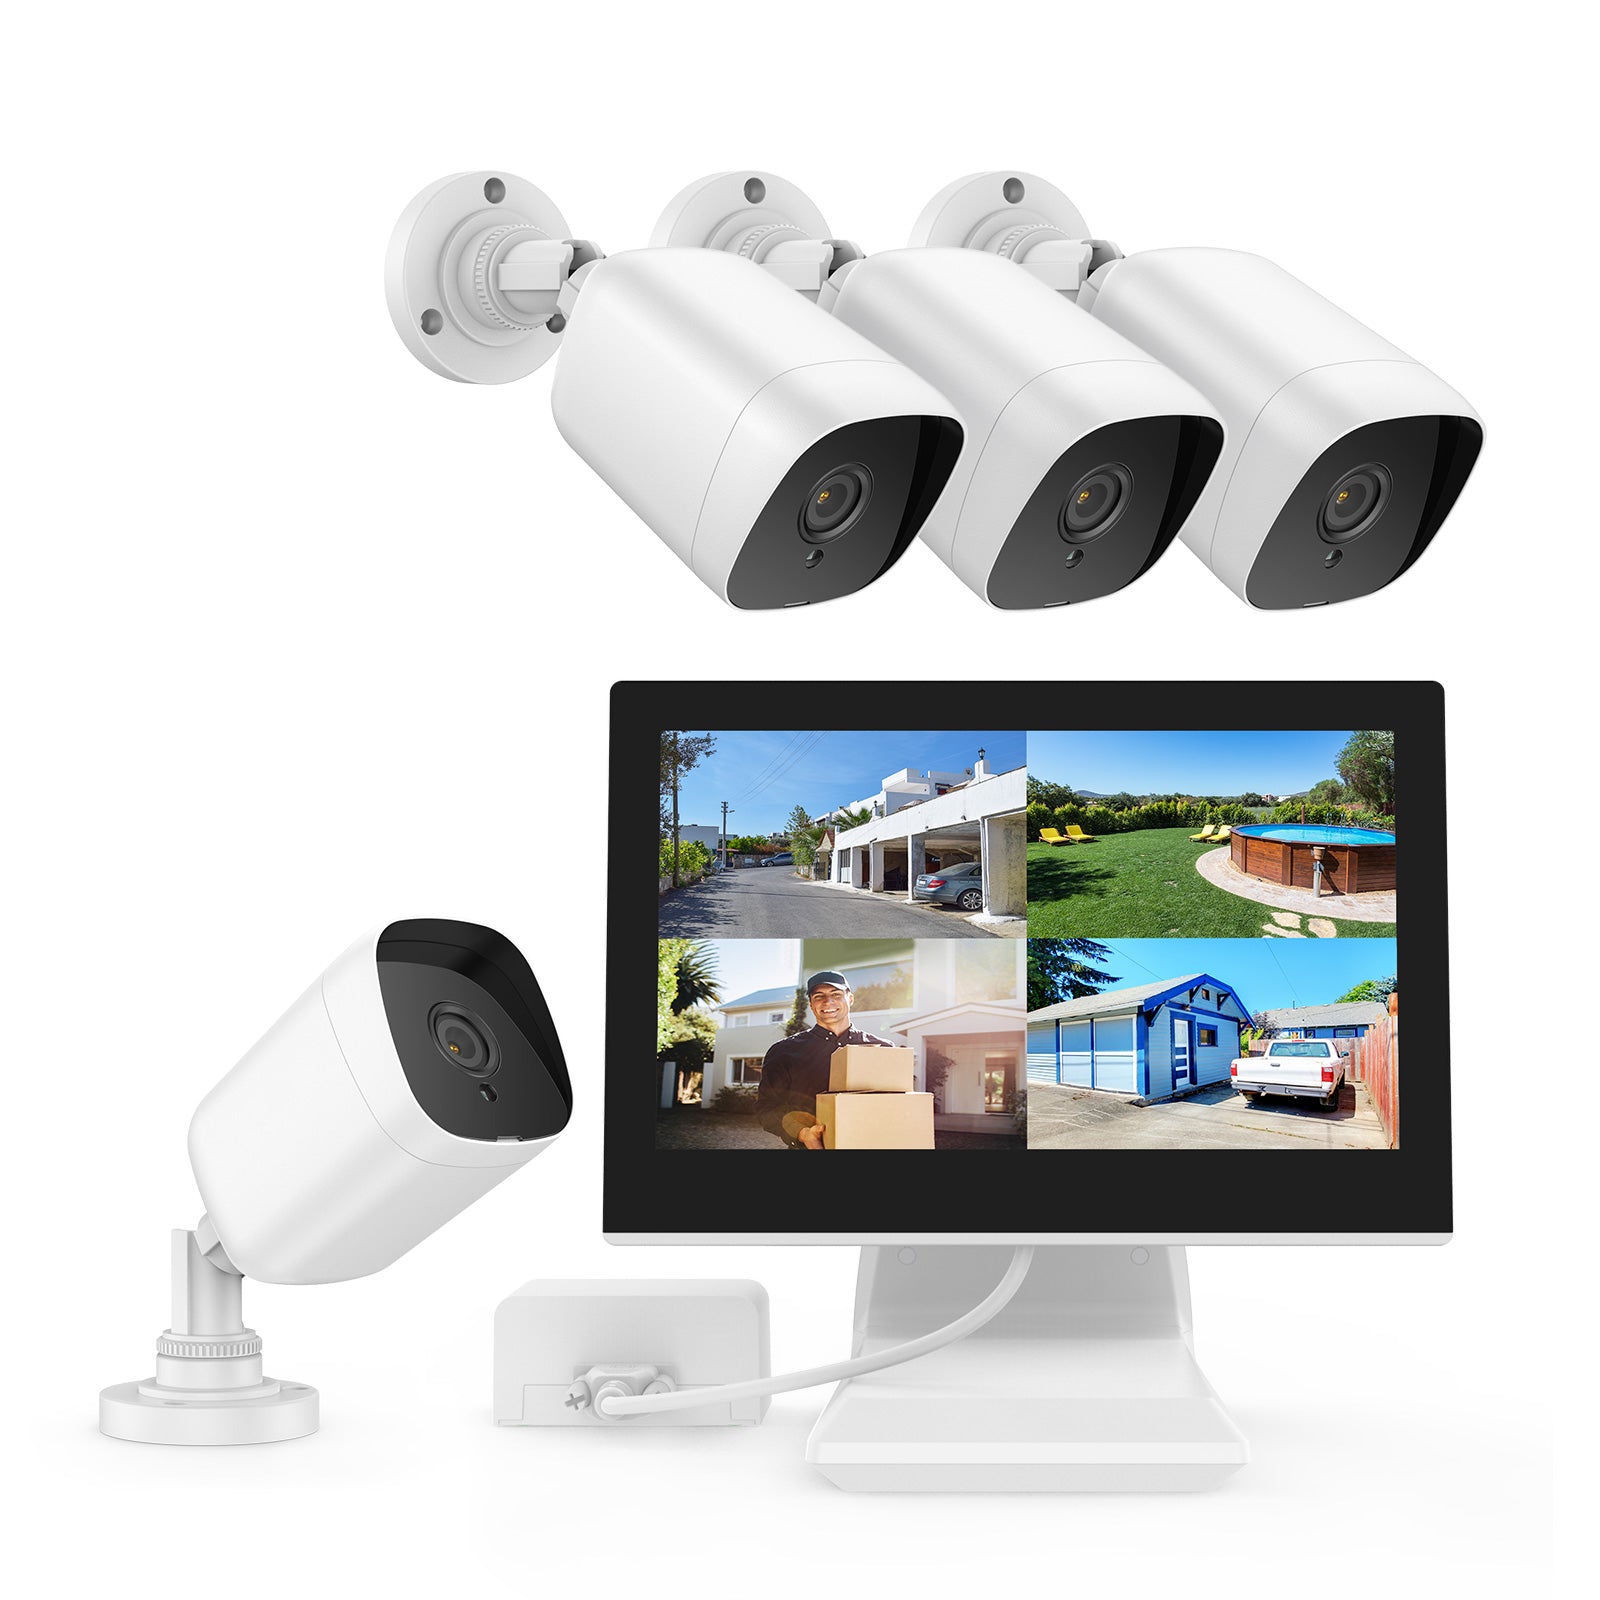 Buy DVR Surveillance Systems - CCTV Security Camera System